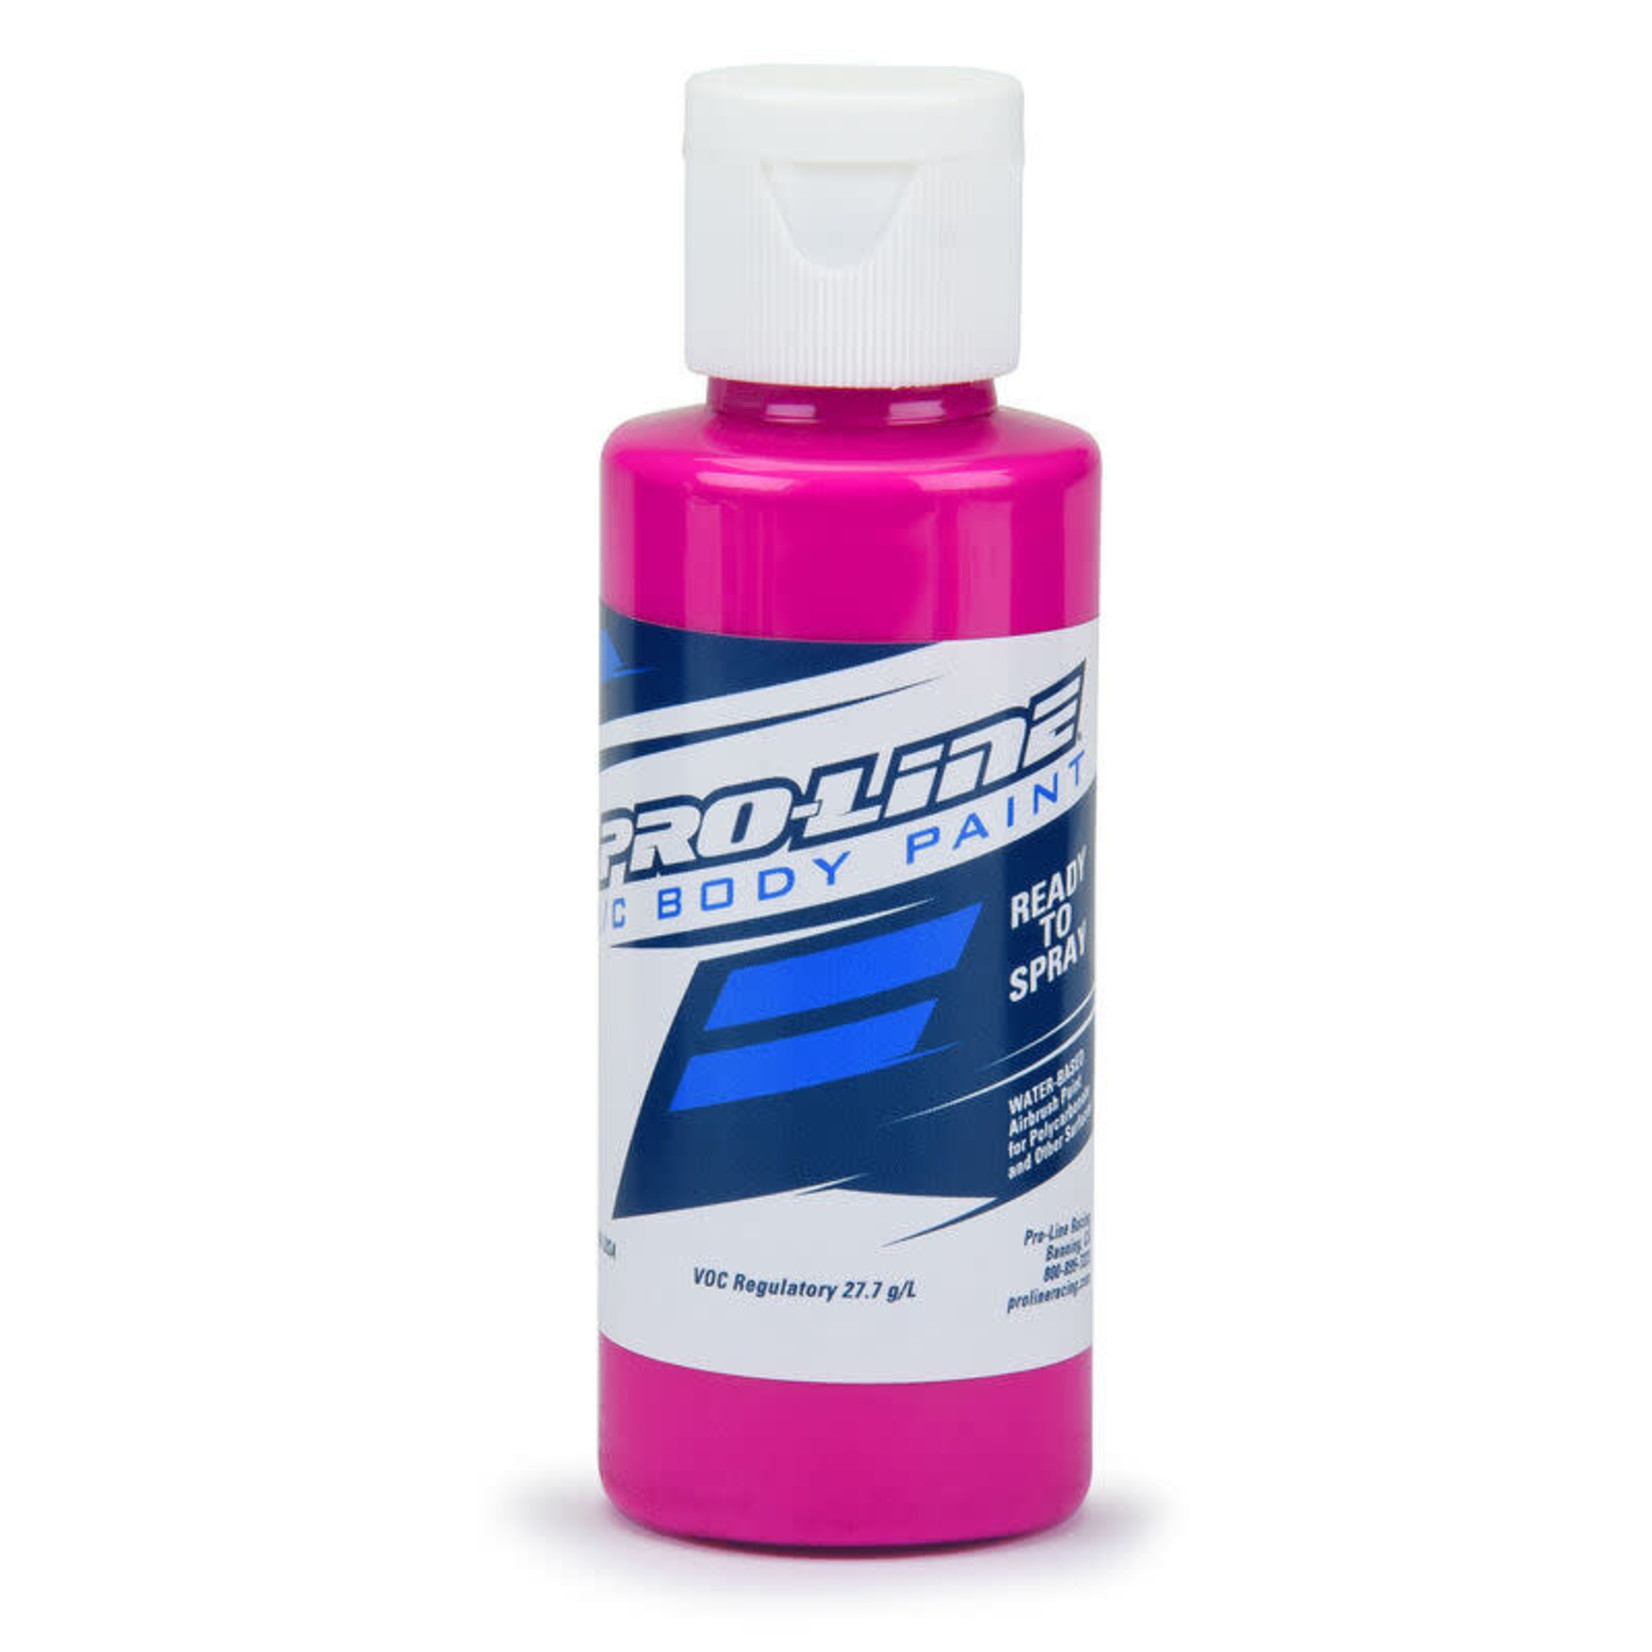 Pro-line Racing PRO632805 Pro-Line RC Body Paint - Fluorescent Fuchsia